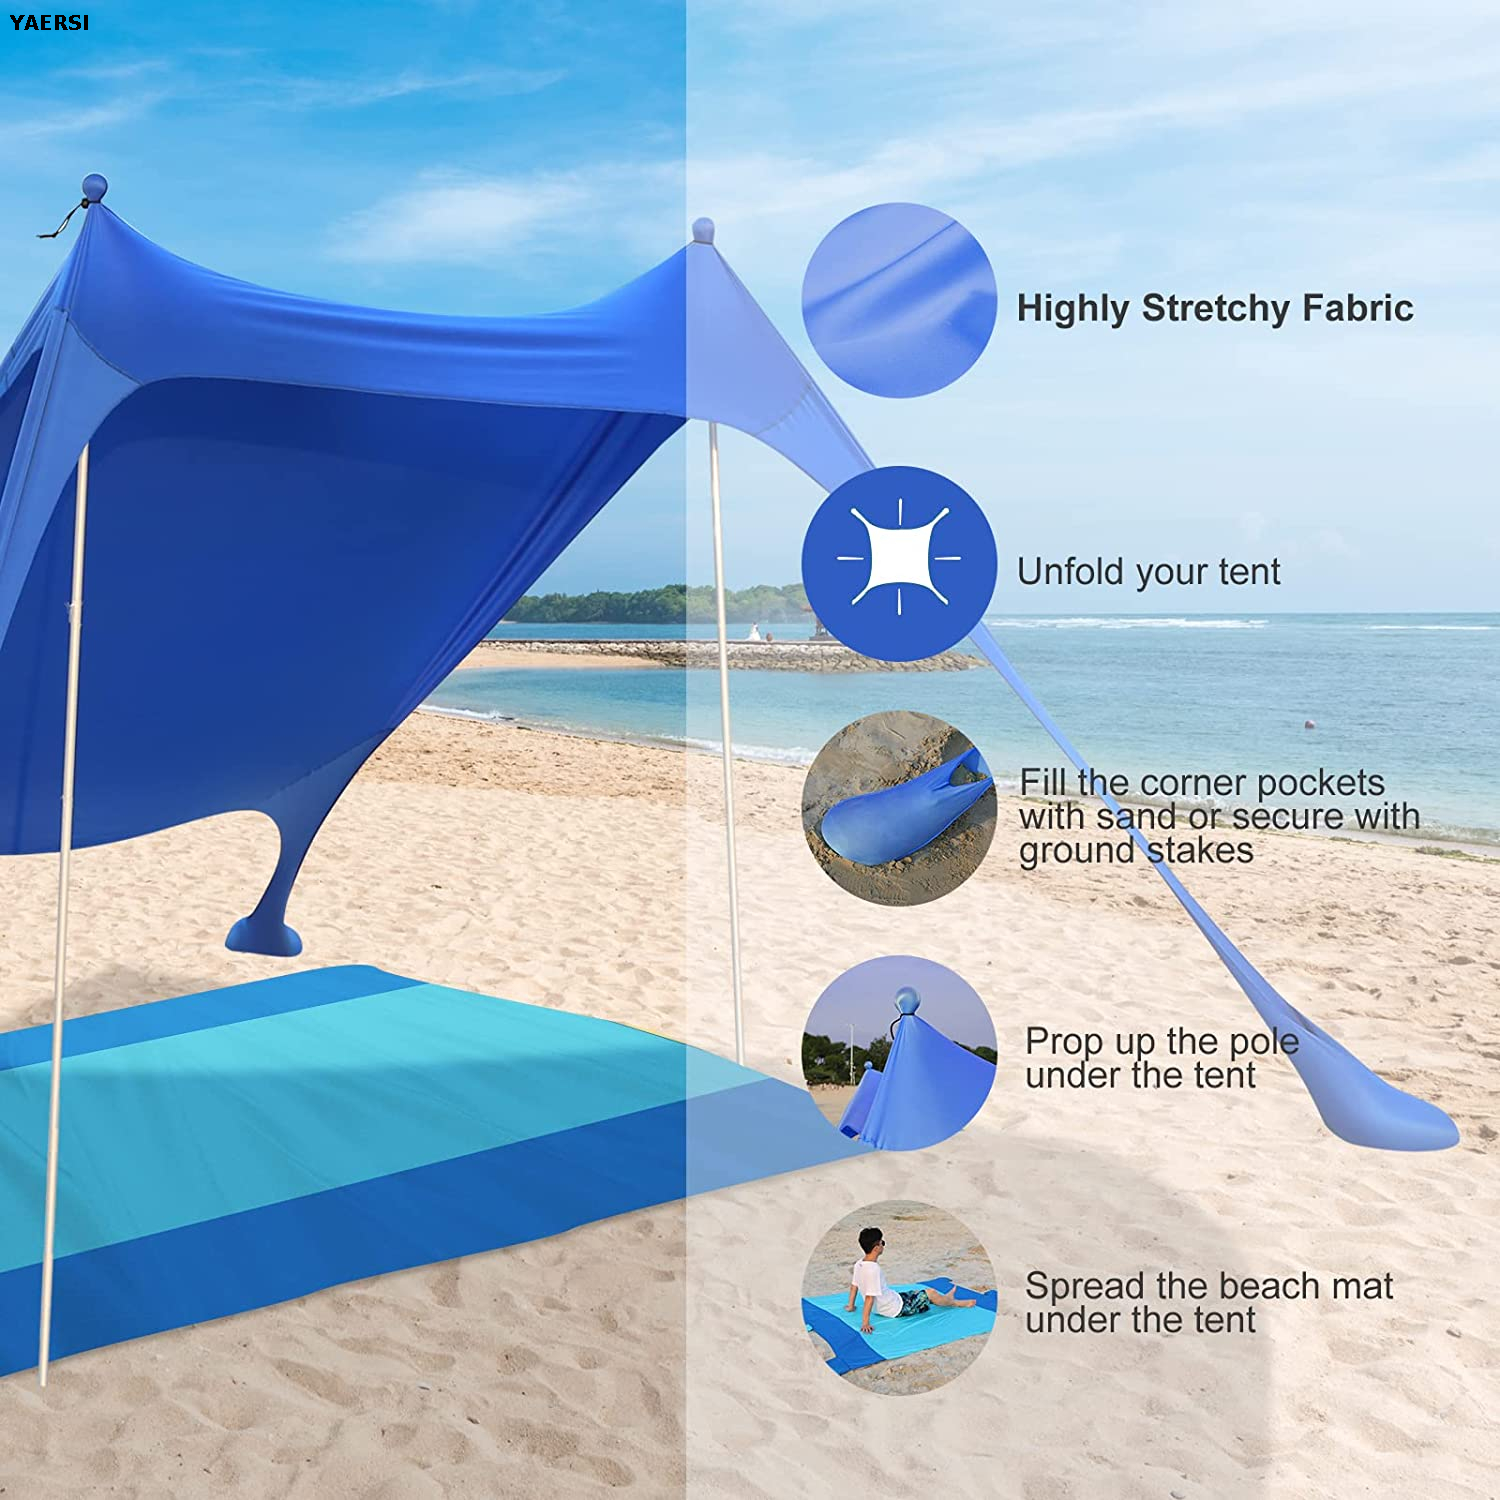 Beach Tent Sun Shade for Outdoor, Camping, Backyard And Picnics